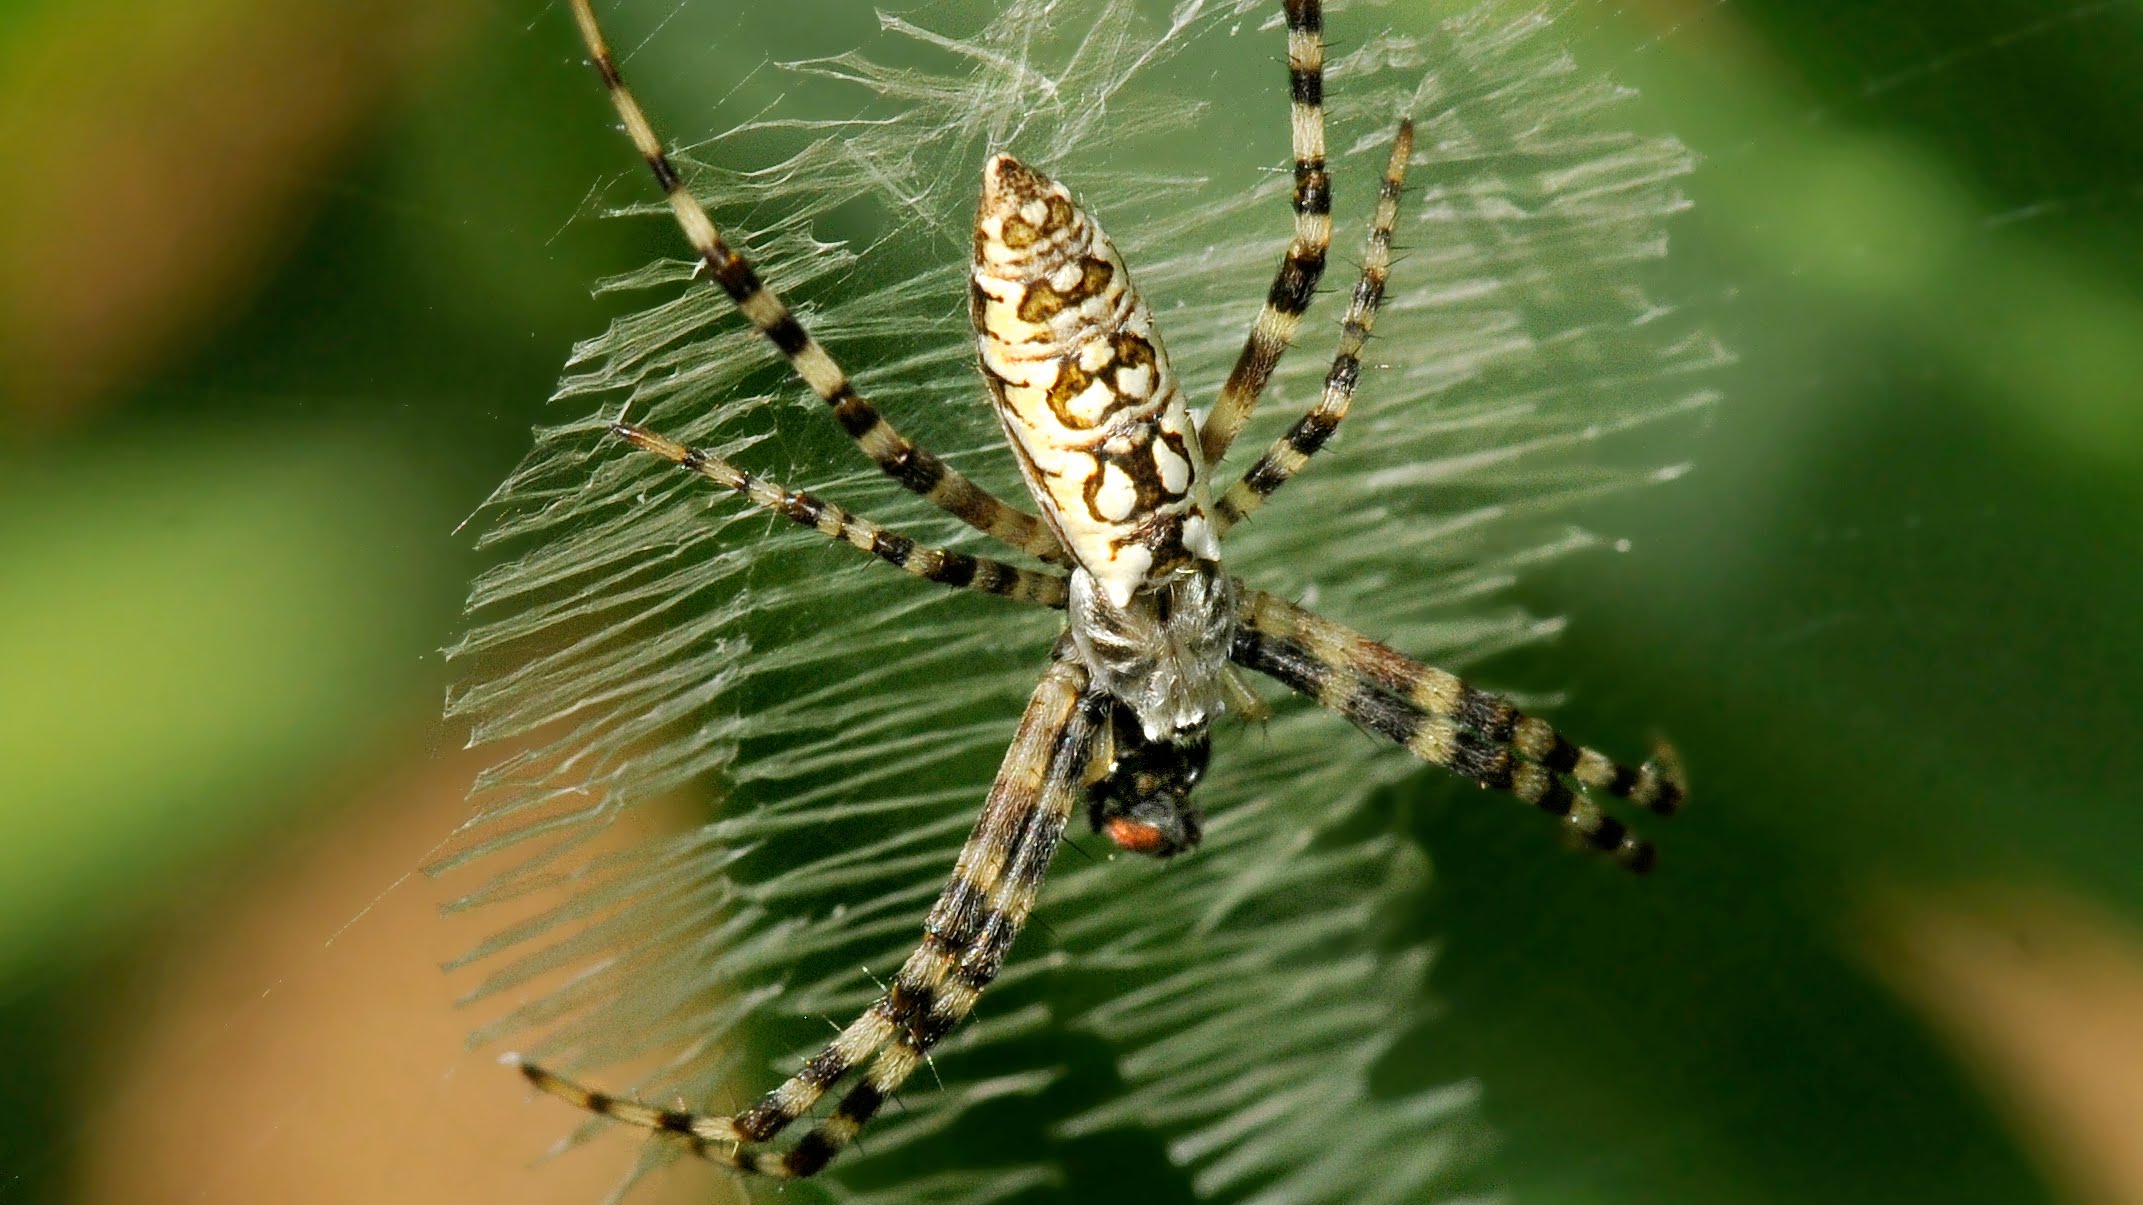 Black and Yellow Garden Spider Capturing Prey - YouTube